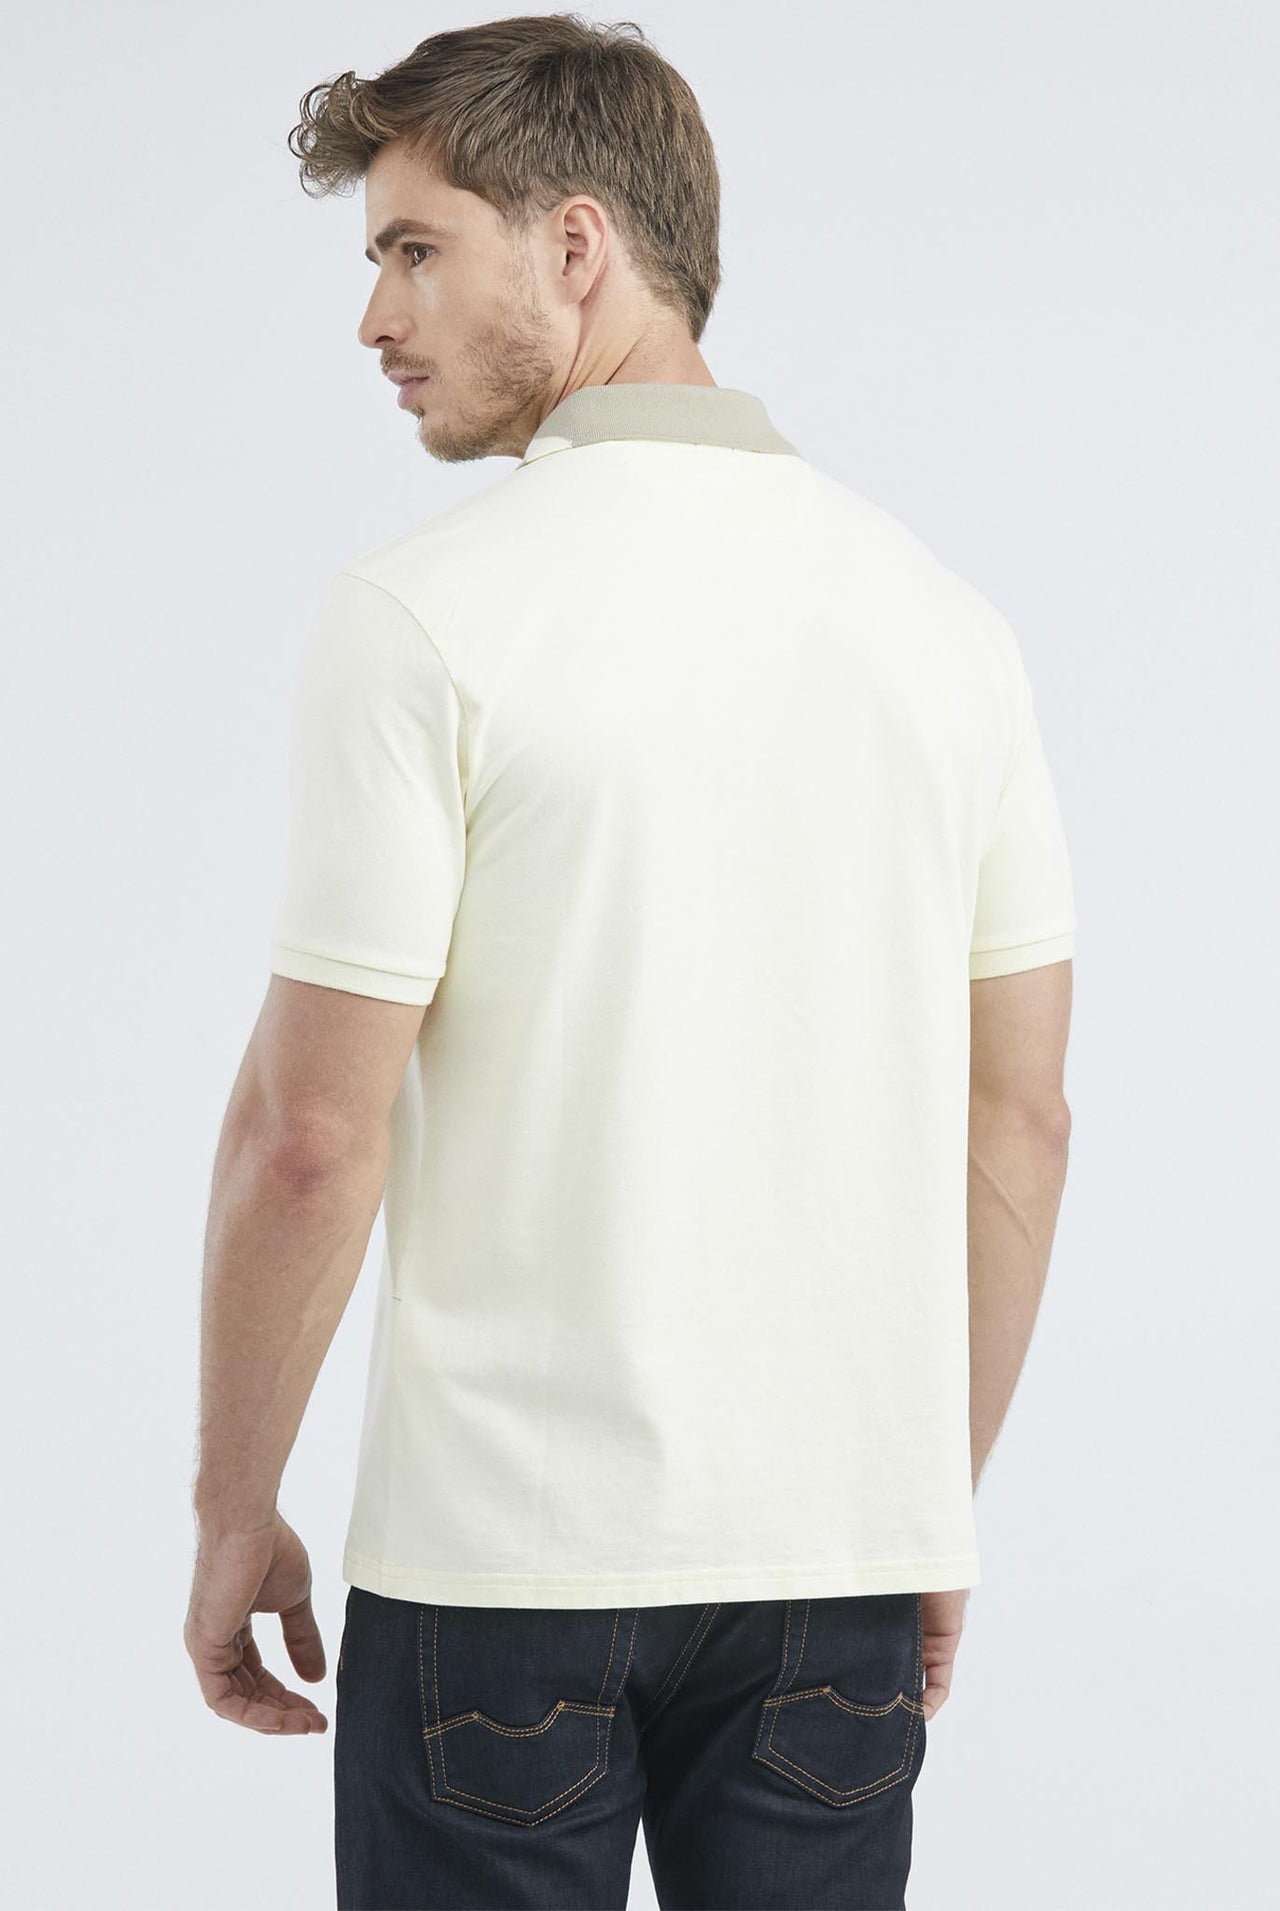 Camiseta Tipo Polo Chevignon Manga Corta, Cuello Tejido en Contraste - Amarillo